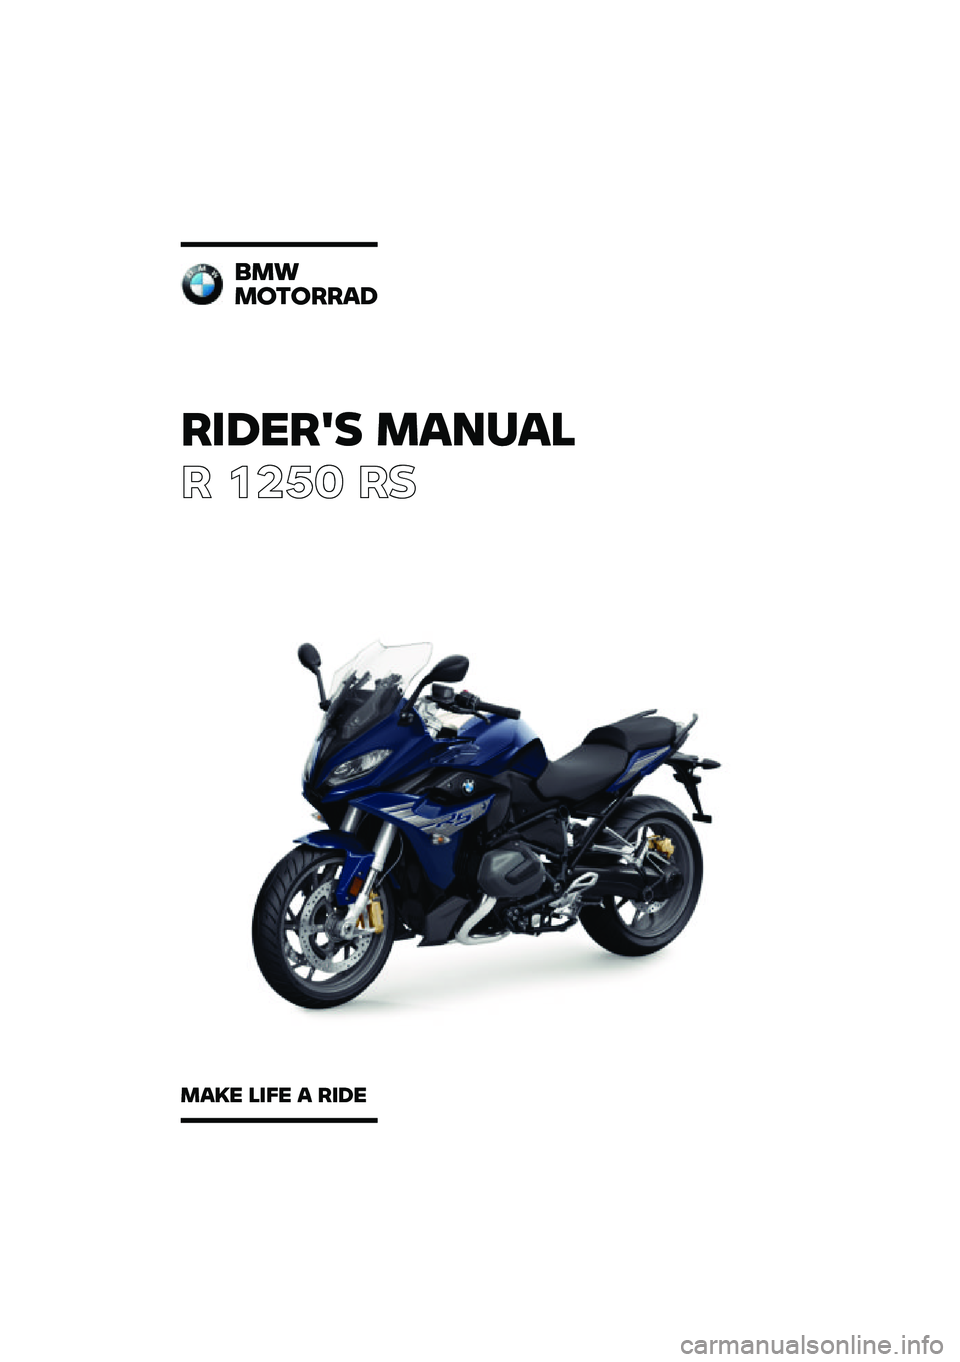 BMW MOTORRAD R 1250 RS 2020  Riders Manual (in English) ������� �\b�	�
��	�\f
� ����	 ��
�
�\b�
�\b������	�
�\b�	�� �\f��� �	 ���� 